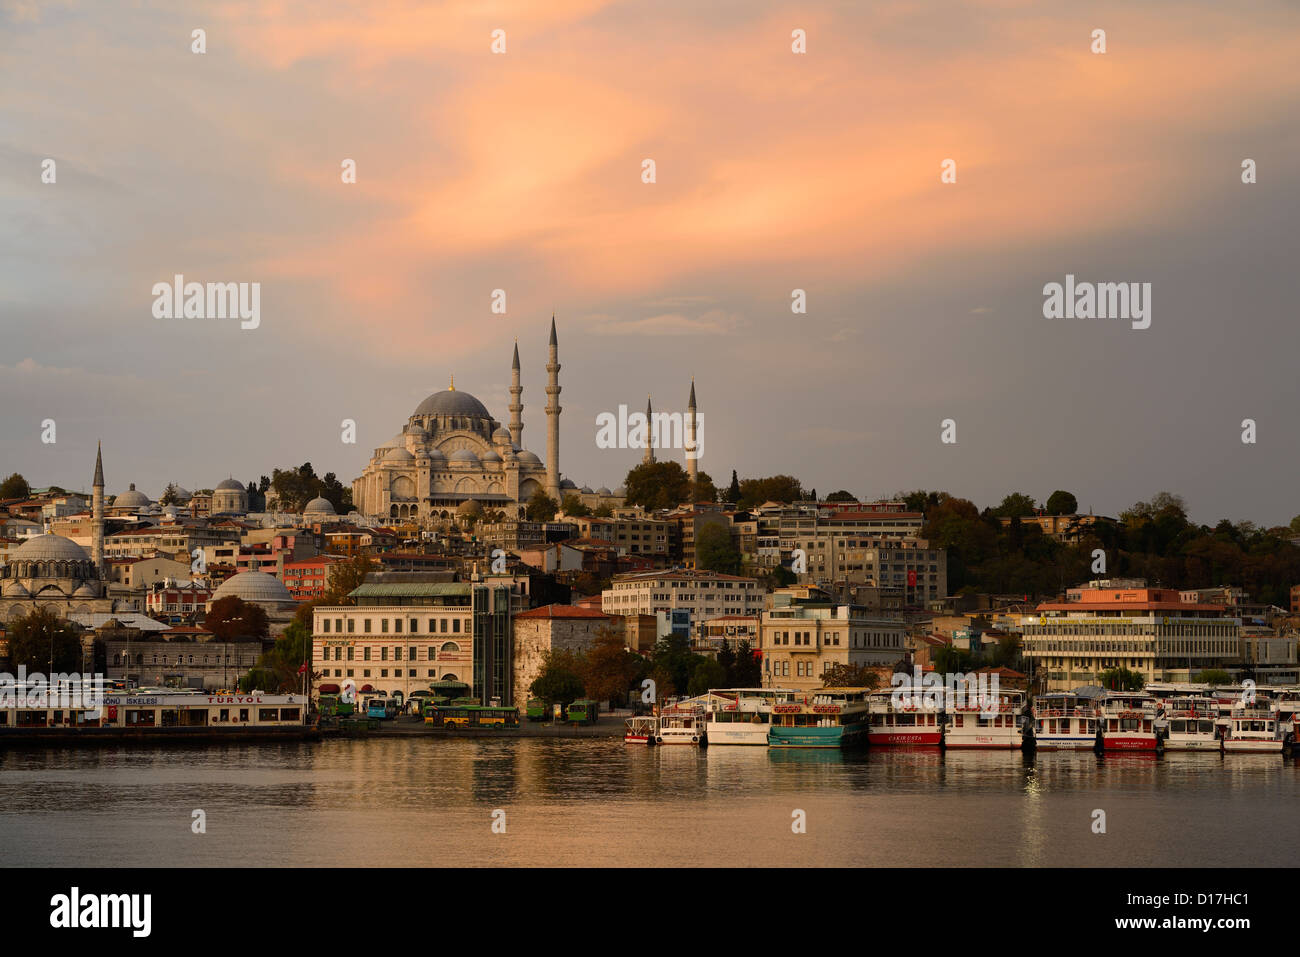 Rustem pasha e moschee suleymaniye con golden sunrise sulle acque del Golden Horn Istanbul TURCHIA Foto Stock